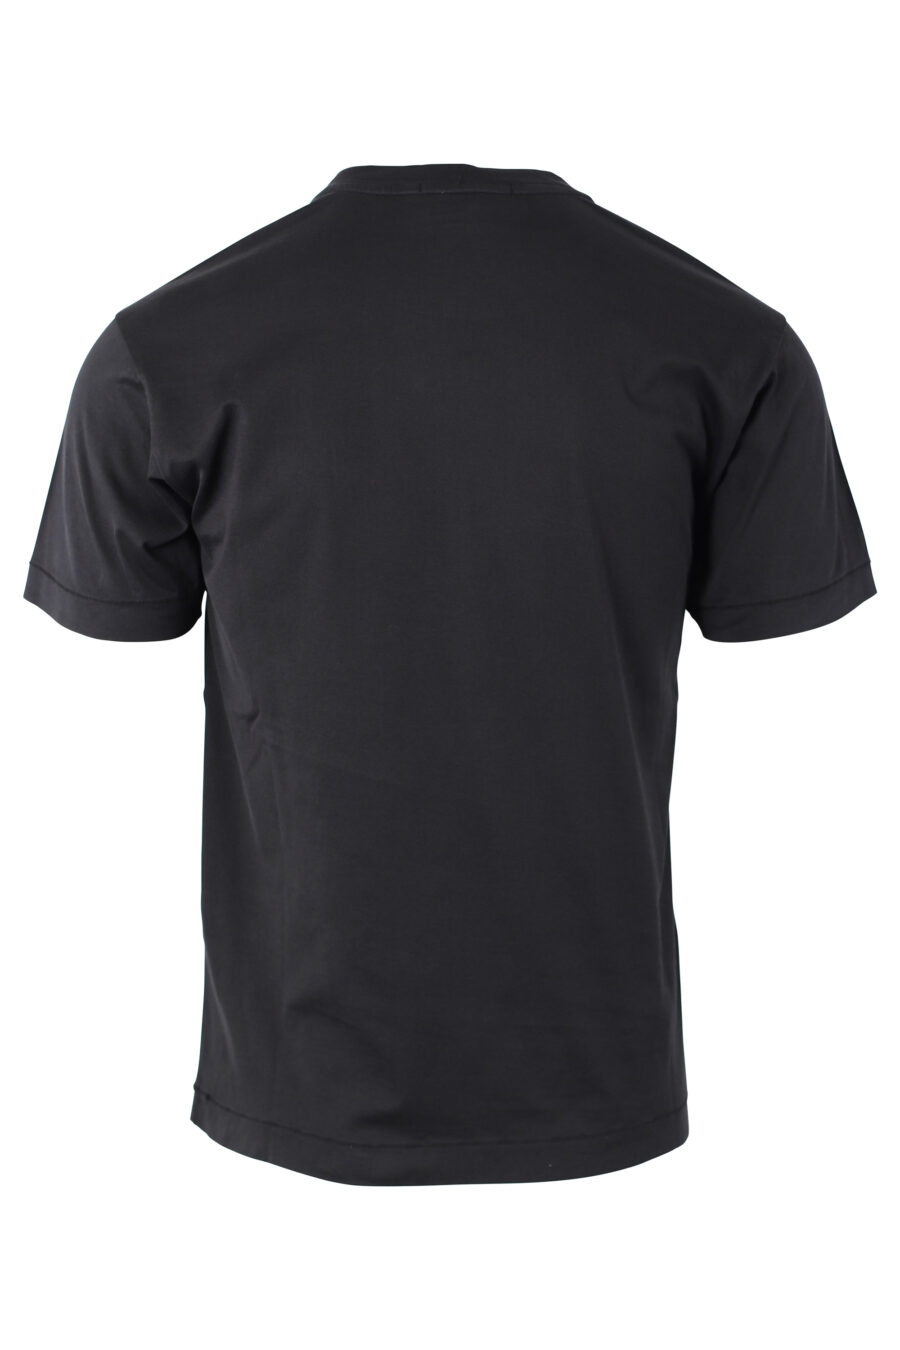 Schwarzes T-Shirt mit Mini-Logoaufnäher - IMG 1134